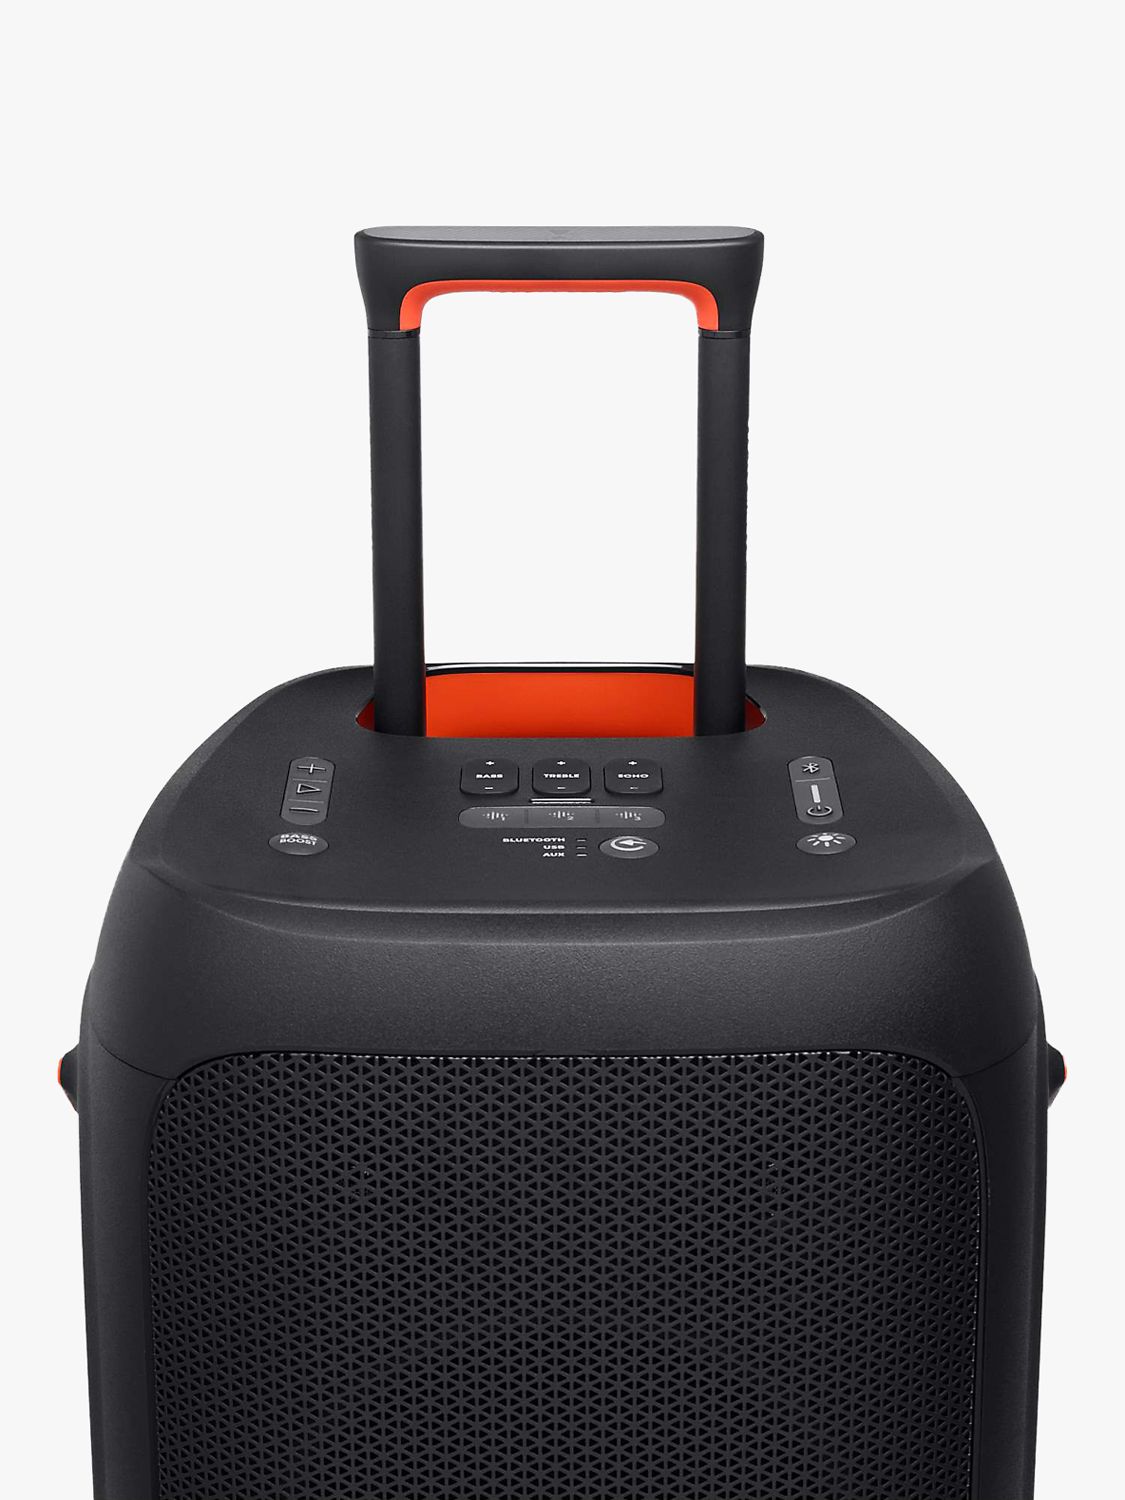 Jbl Partybox 310 Portable Bluetooth Speaker